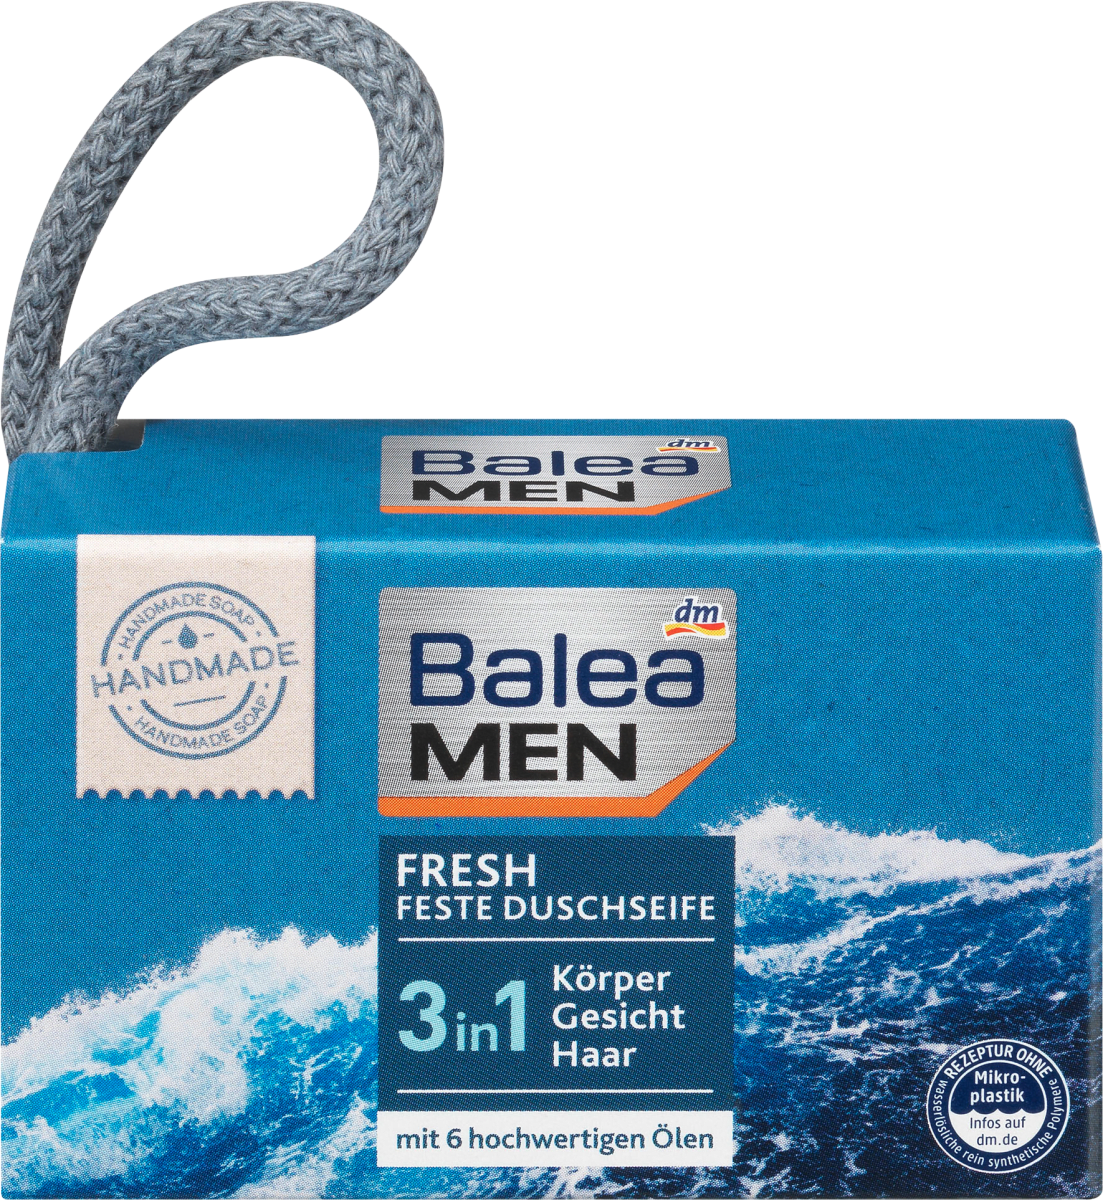 Balea Men Feste Duschseife Fresh 100 G Dauerhaft Gunstig Online Kaufen Dm De